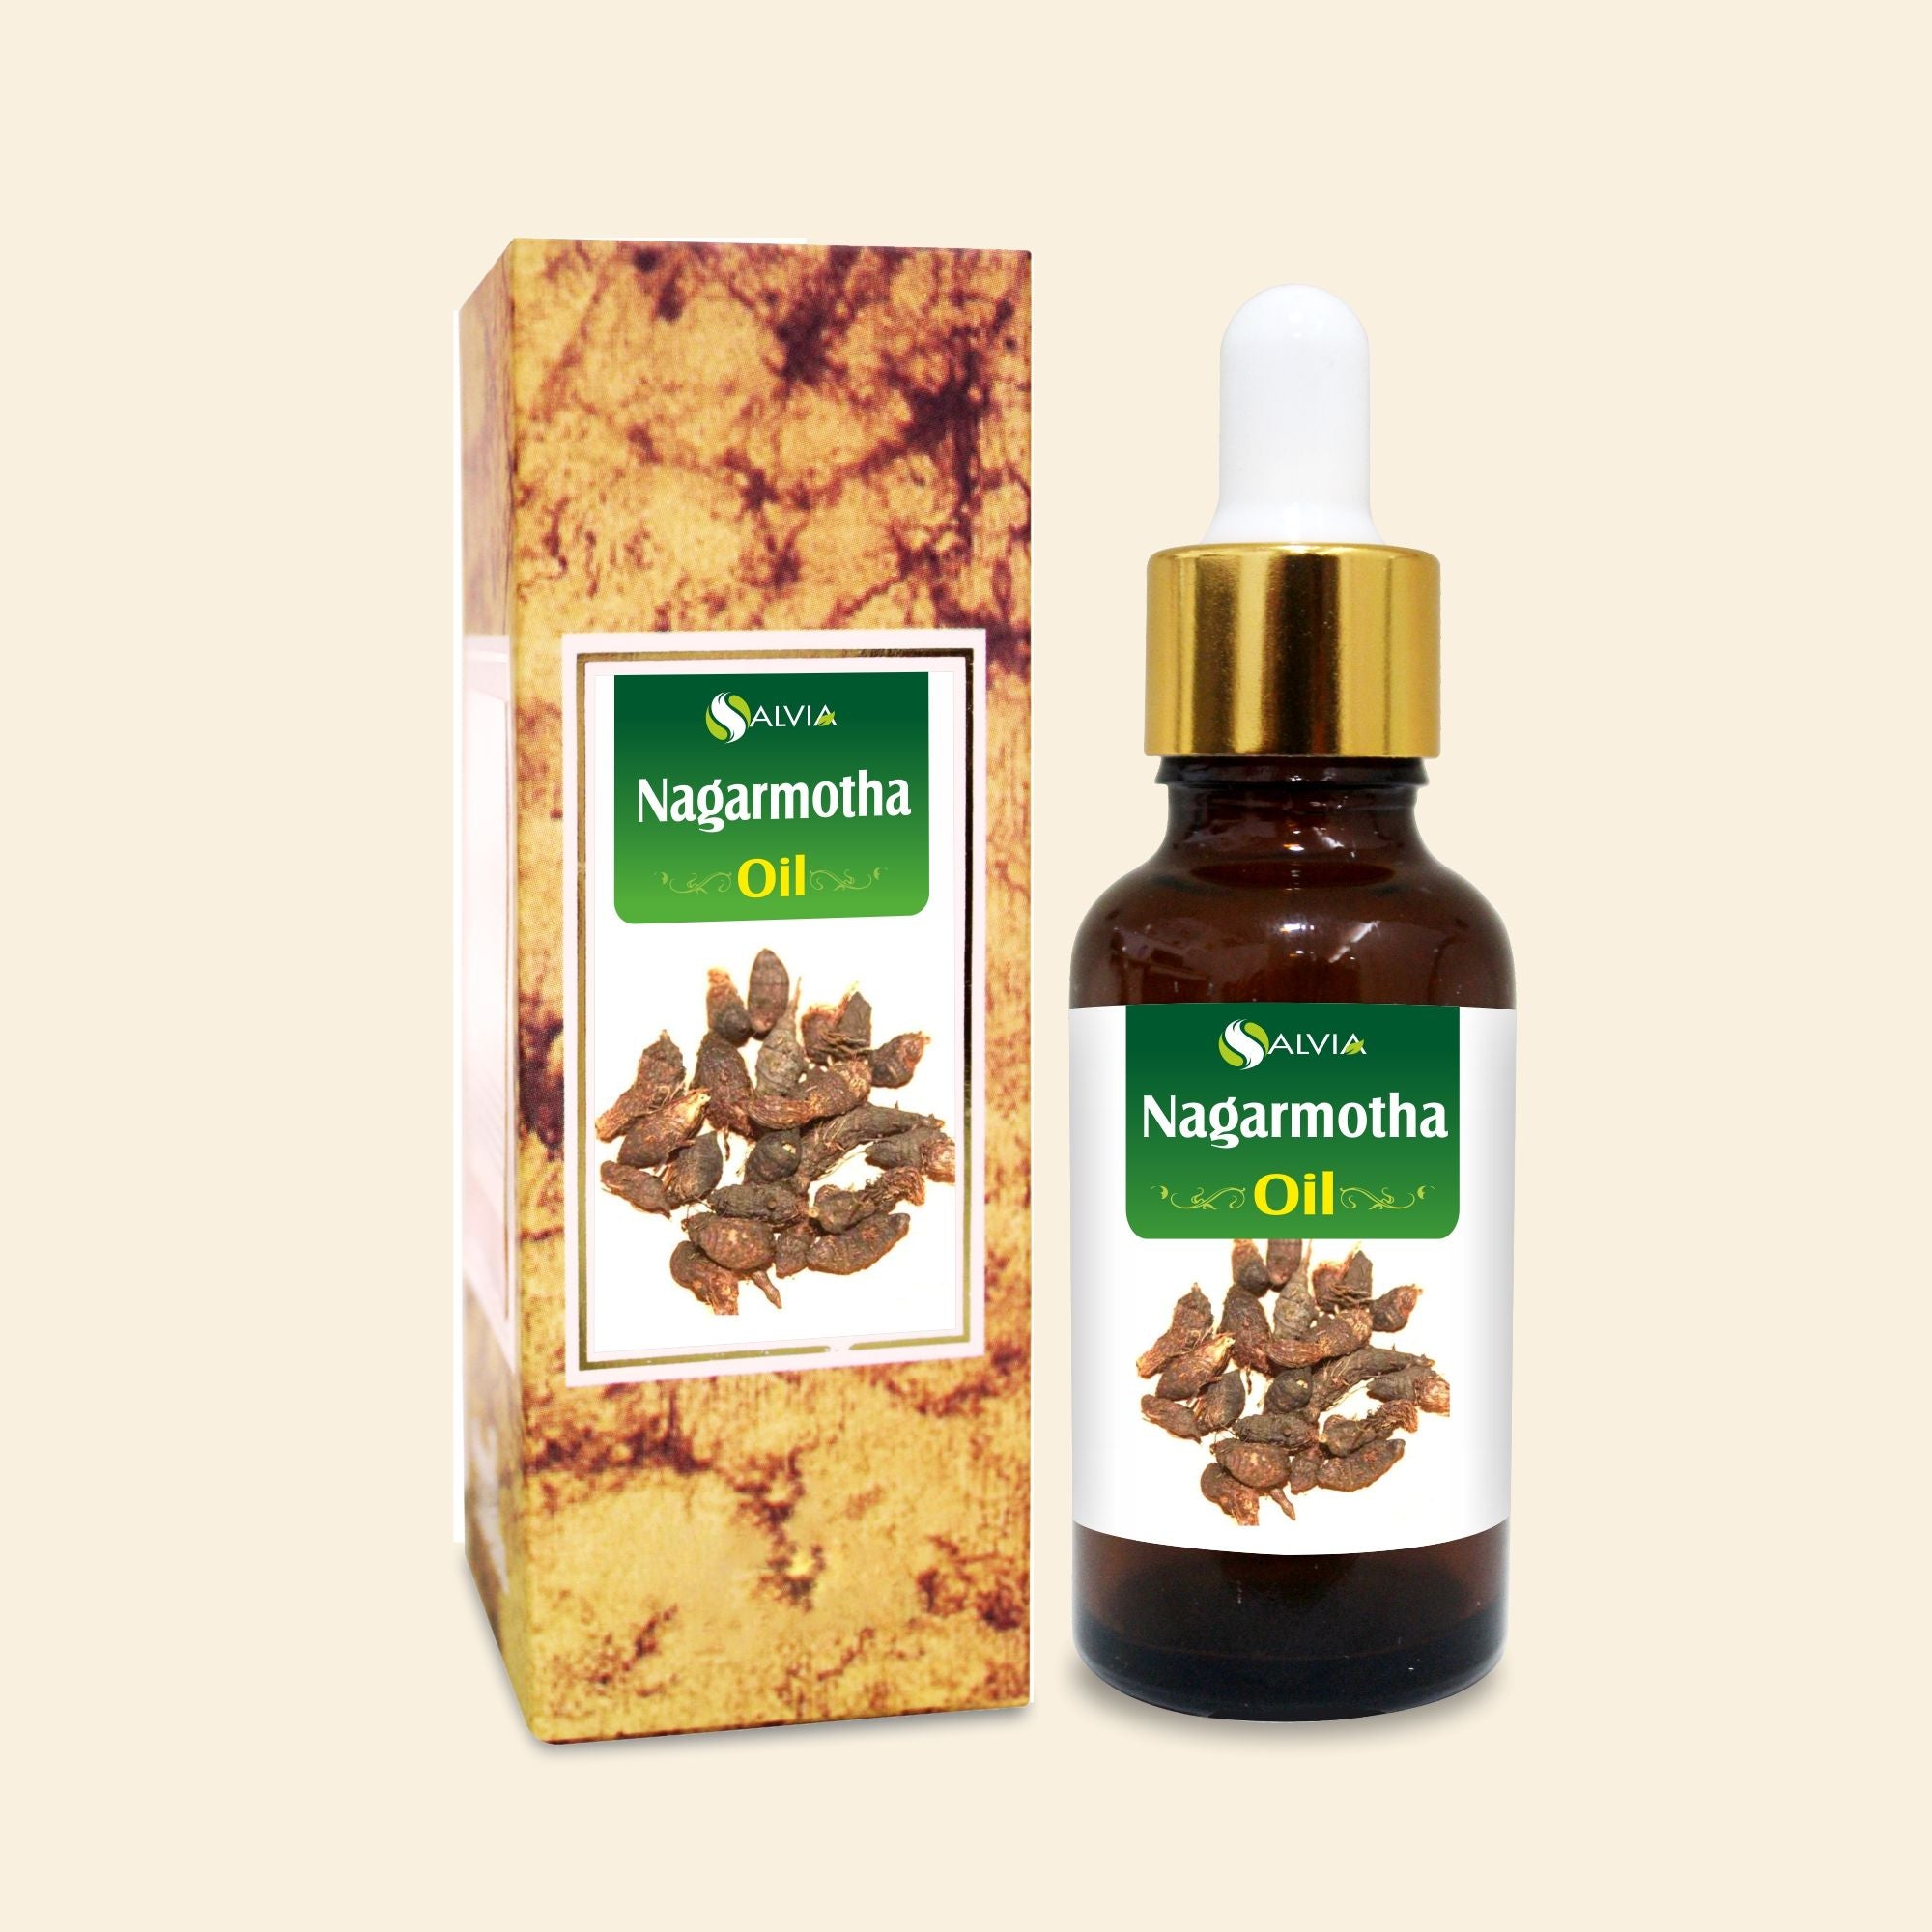 Salvia Natural Essential Oils Nagarmotha Oil (Cyperus) Undiluted Pure Essential Oil